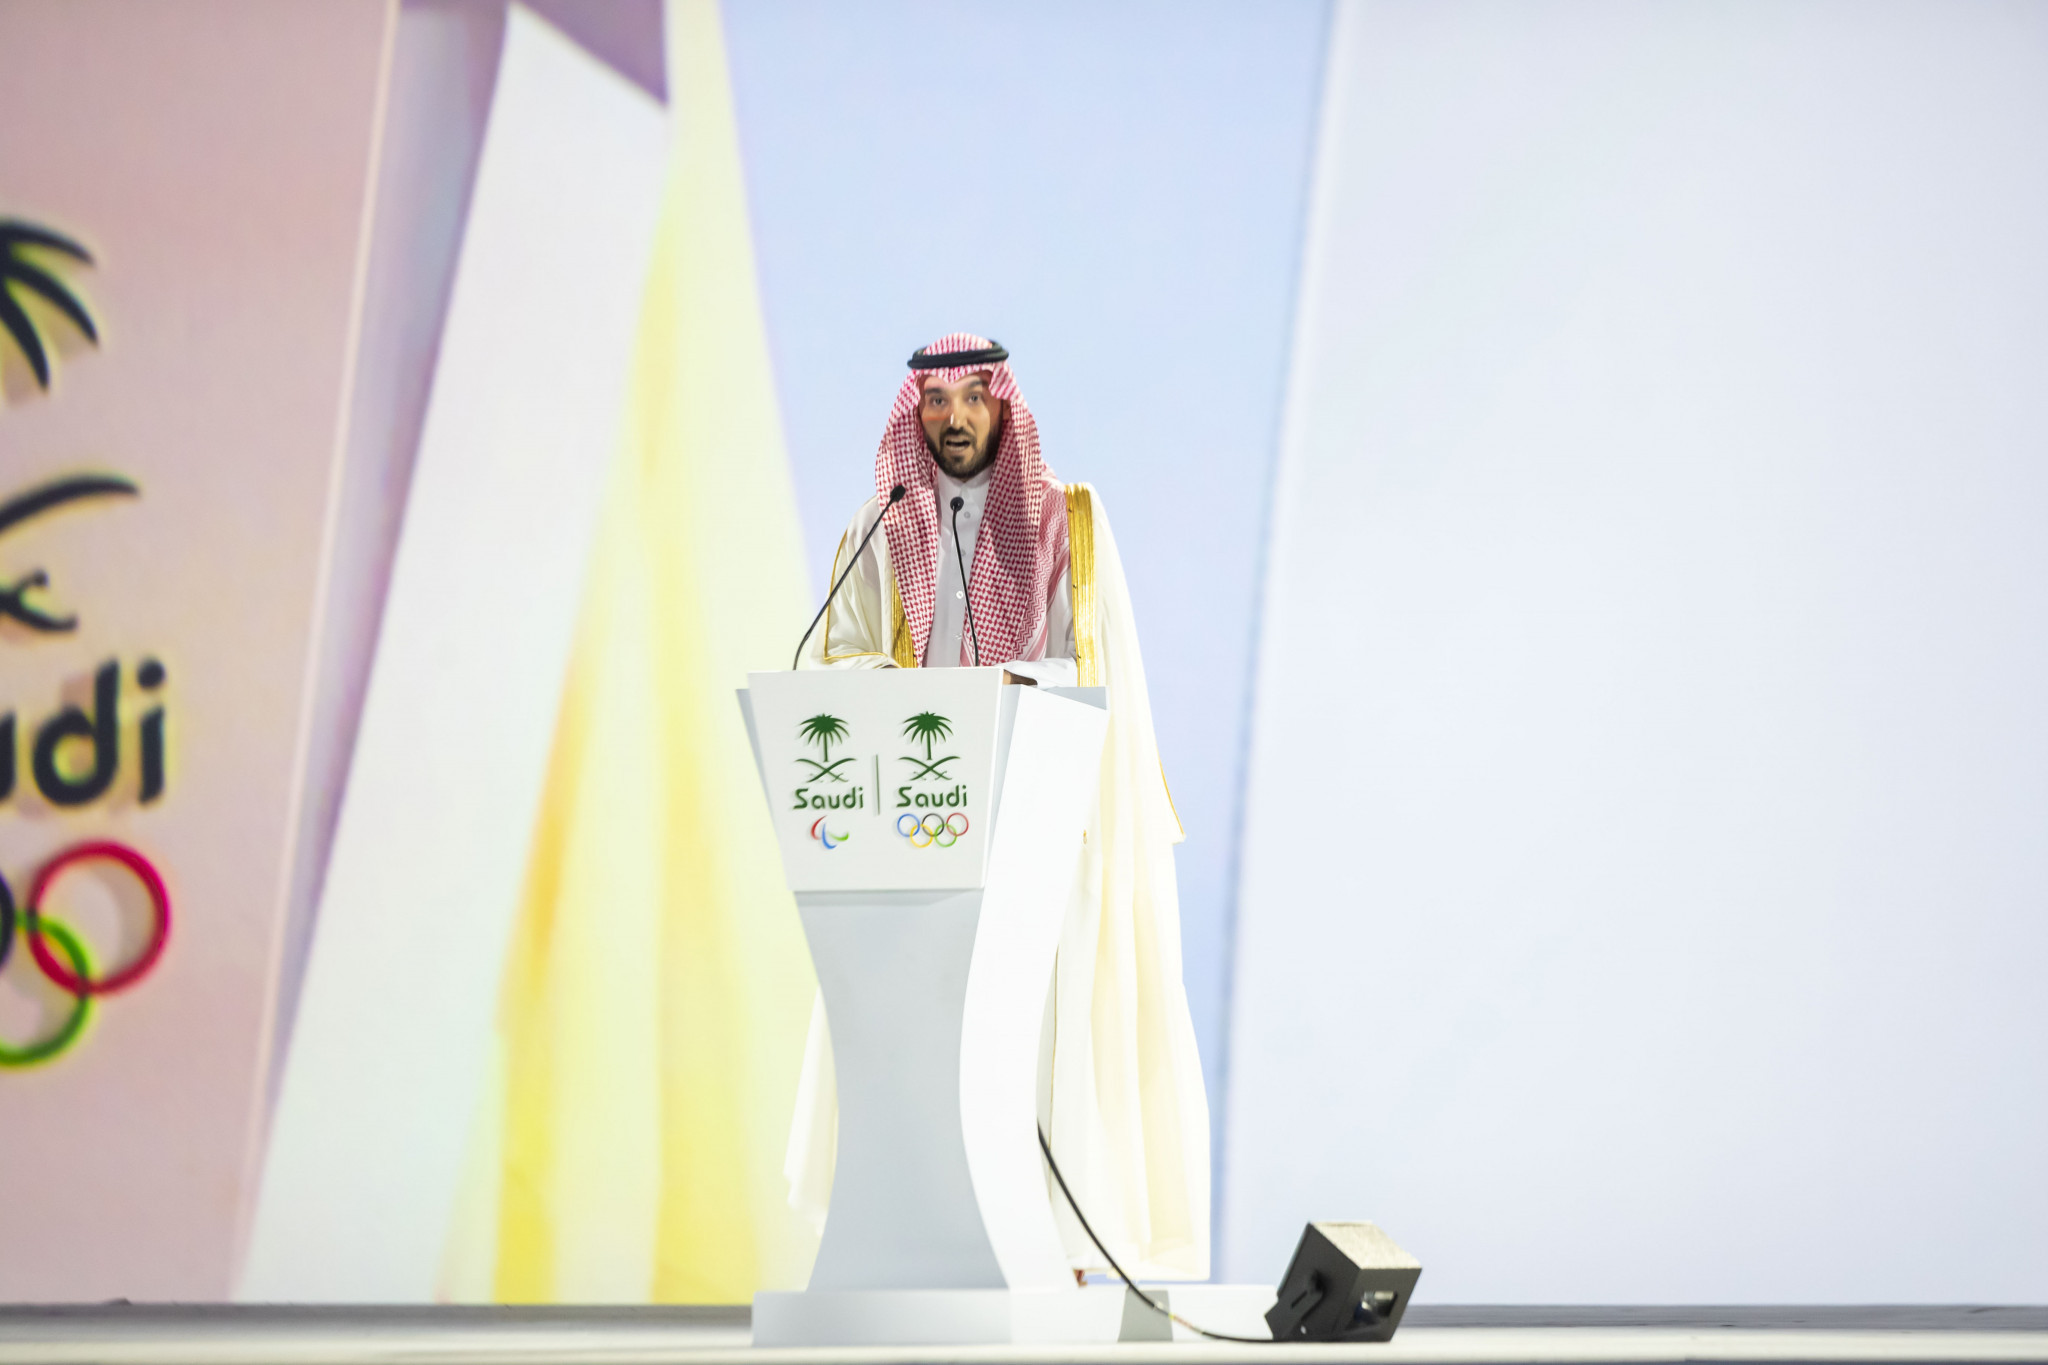 Prince Abdulaziz bin Turki Al-Faisal made clear what Saudi Arabia's sporting ambitions are at the Opening Ceremony ©Saudi Games